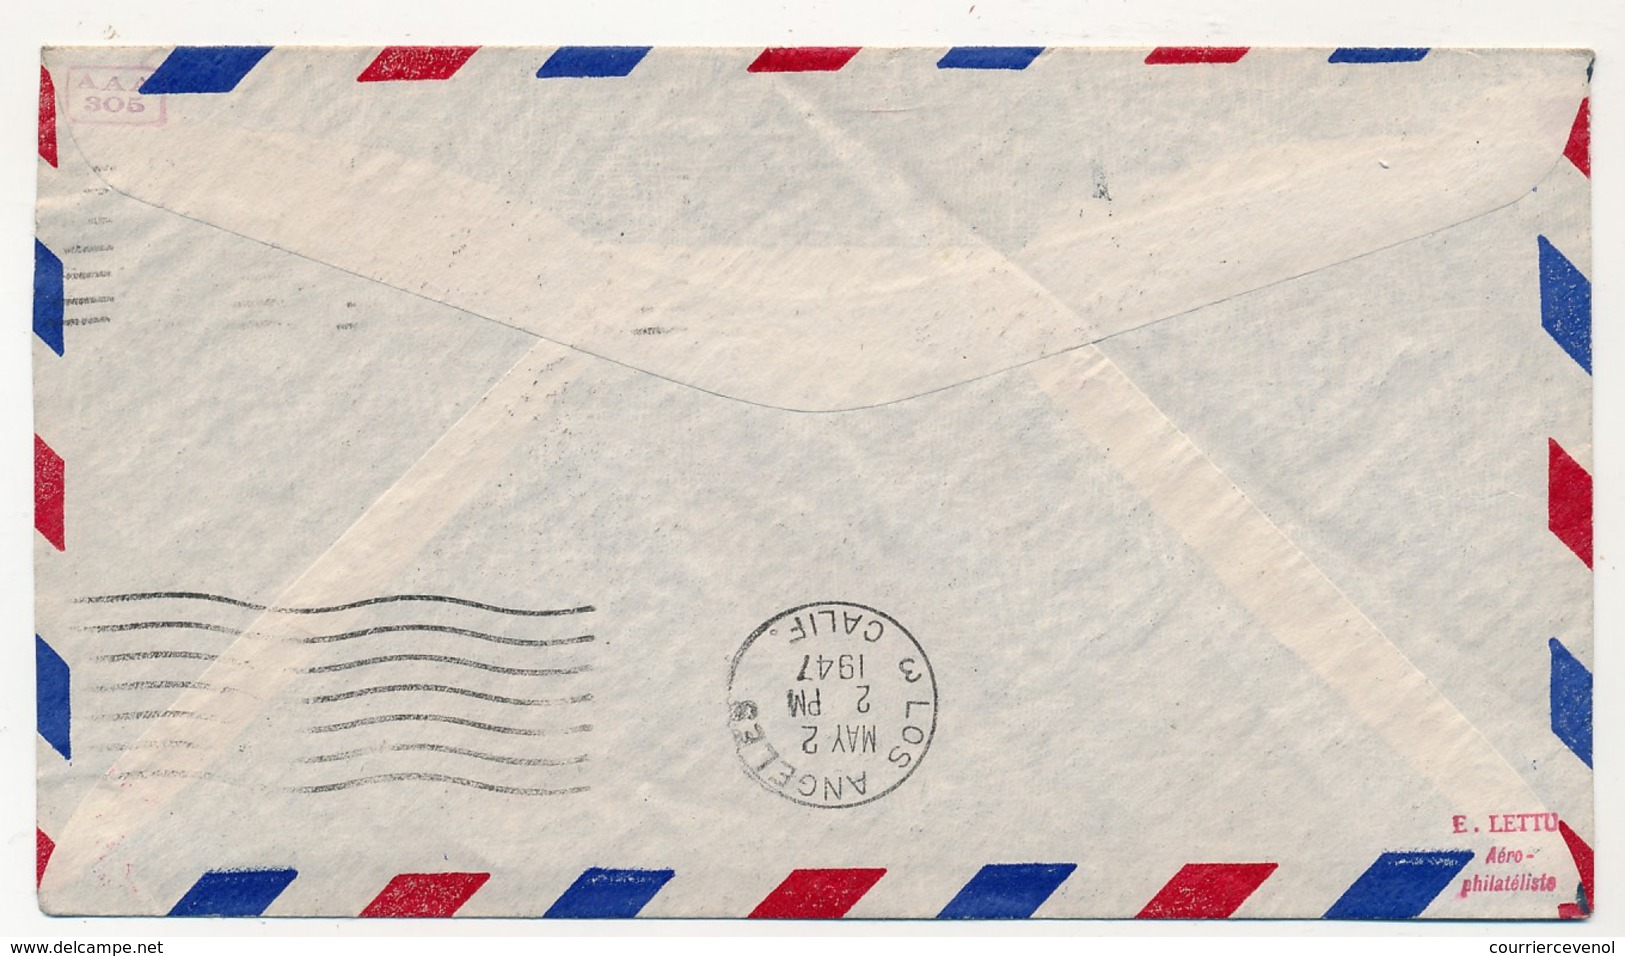 Etats Unis - Premier Vol YUMA Arizona - Western Air Lines - 2 Mai 1947 - 2c. 1941-1960 Lettres